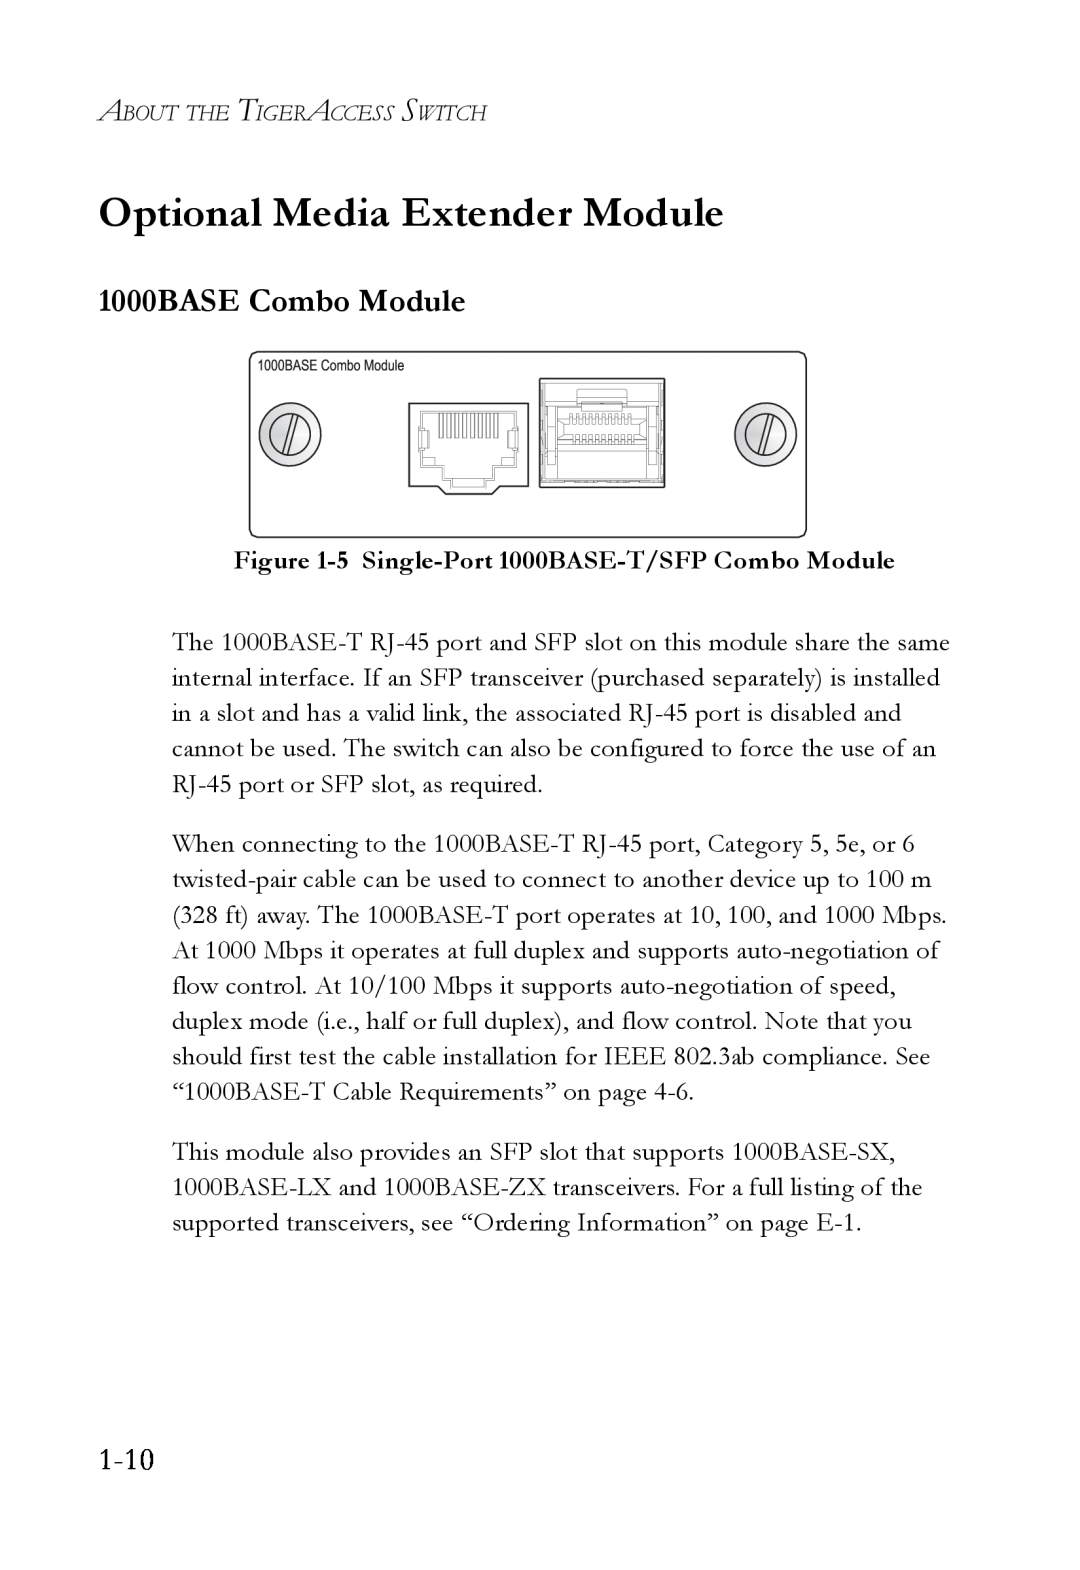 SMC Networks SMC7824M/FSW manual Optional Media Extender Module, 1000BASE Combo Module, 1-10 